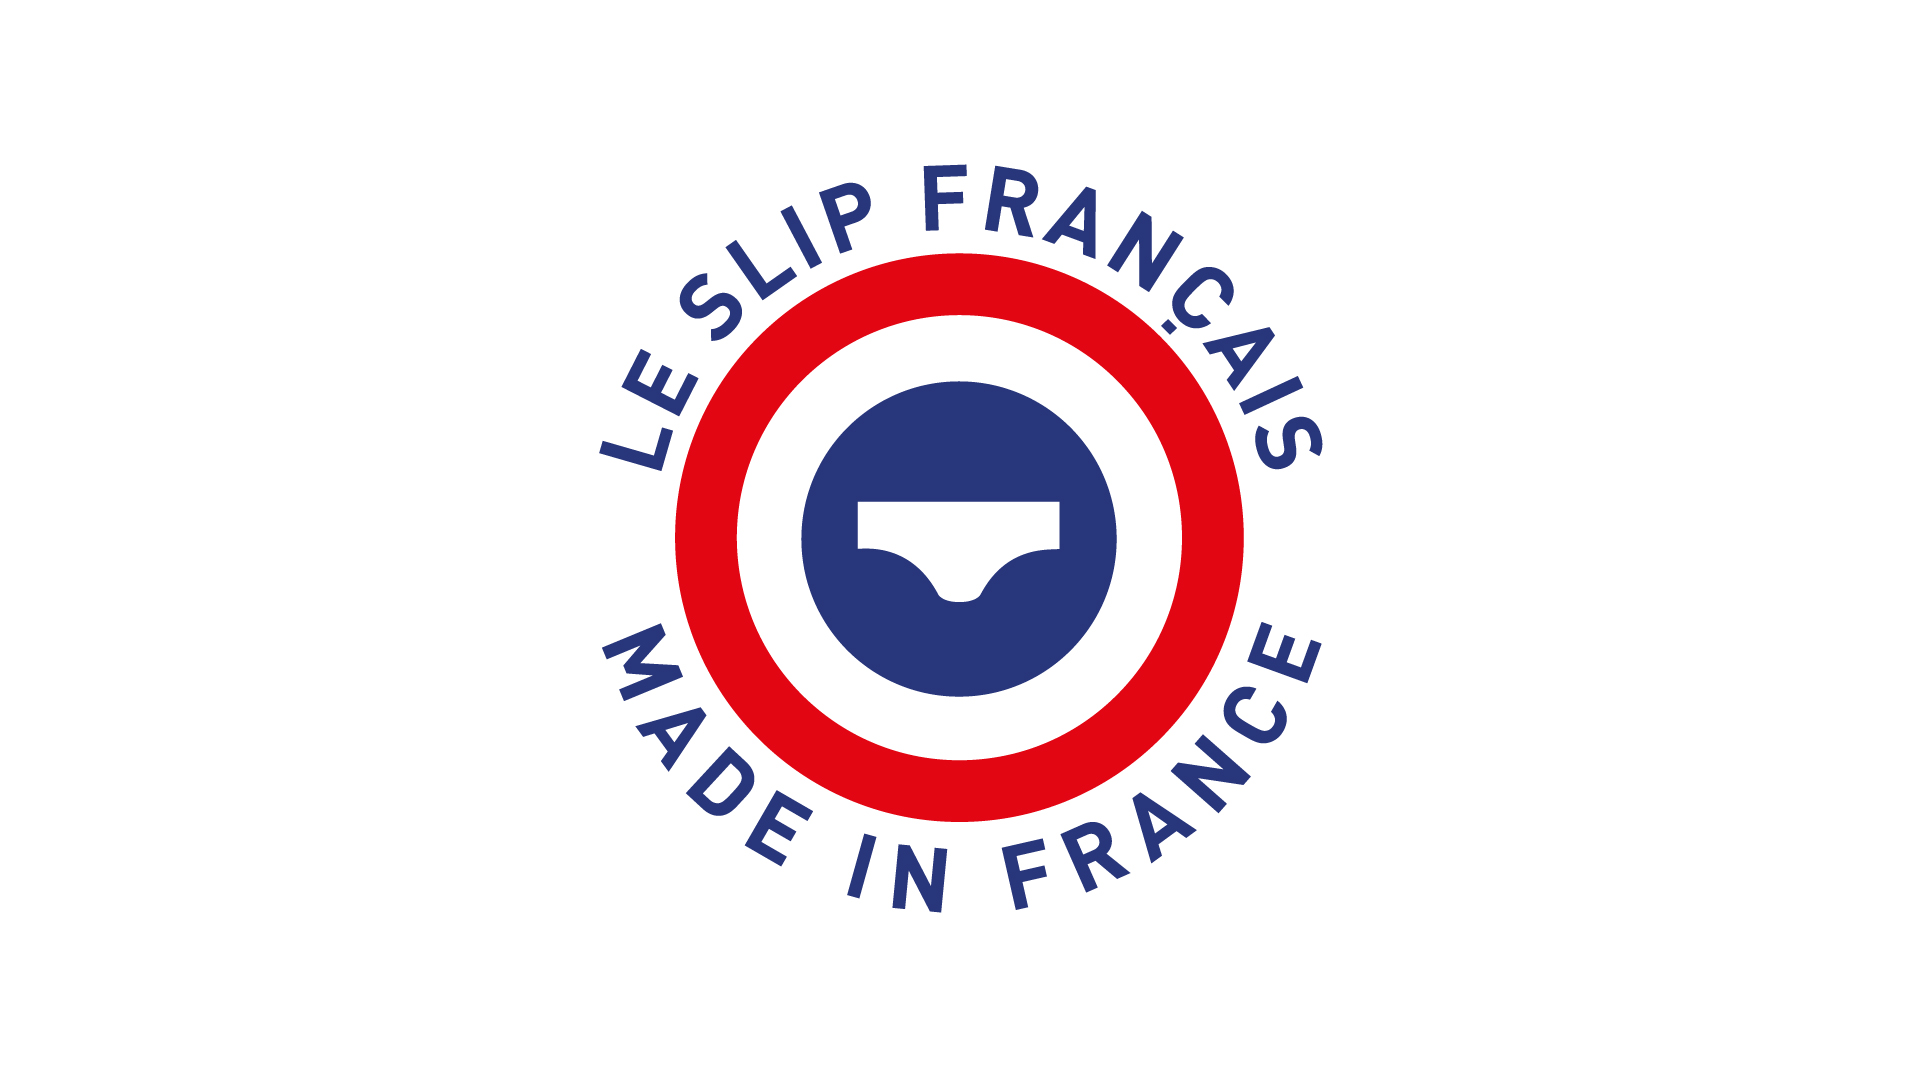 les slipes francais